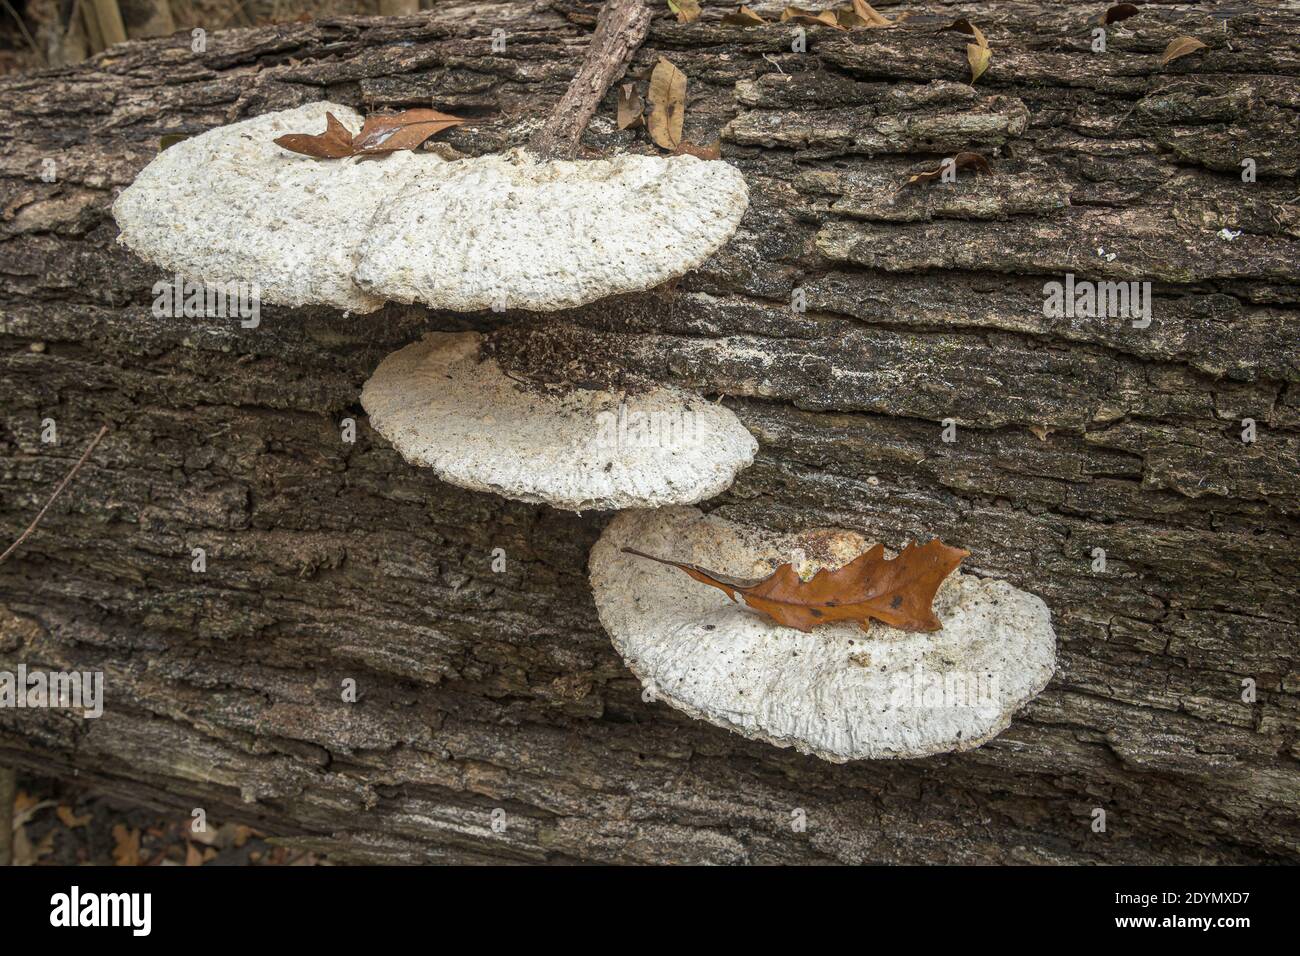 White shelf fungus mushroom on downed tree trunk Stock Photo